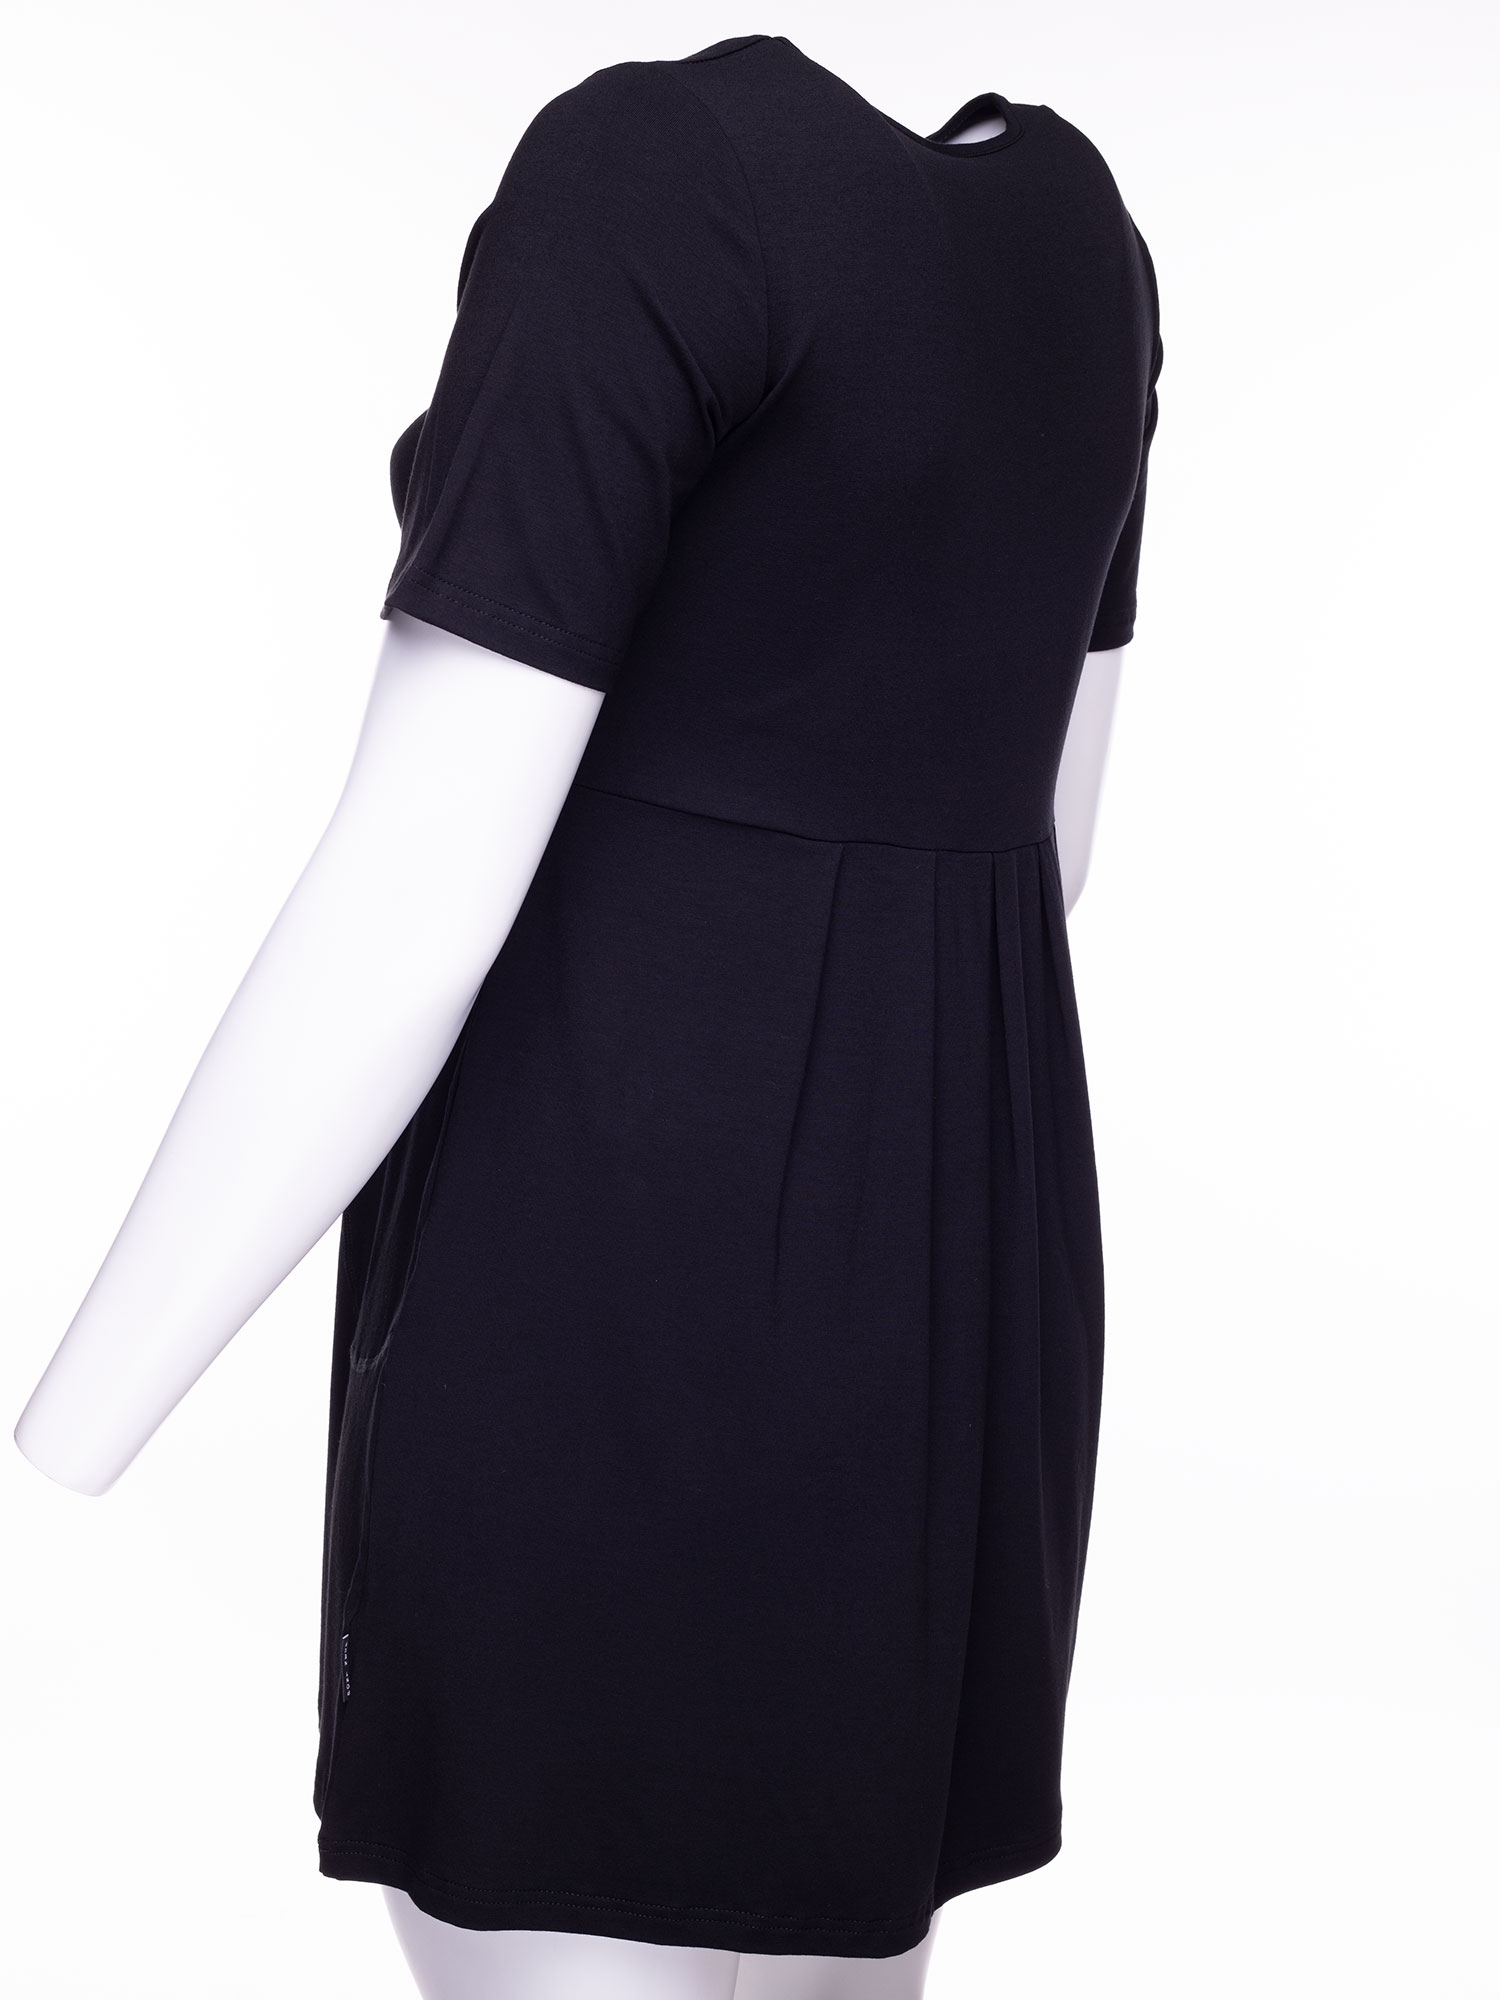 GREDA - Sort kjole i viskose jersey fra Pont Neuf